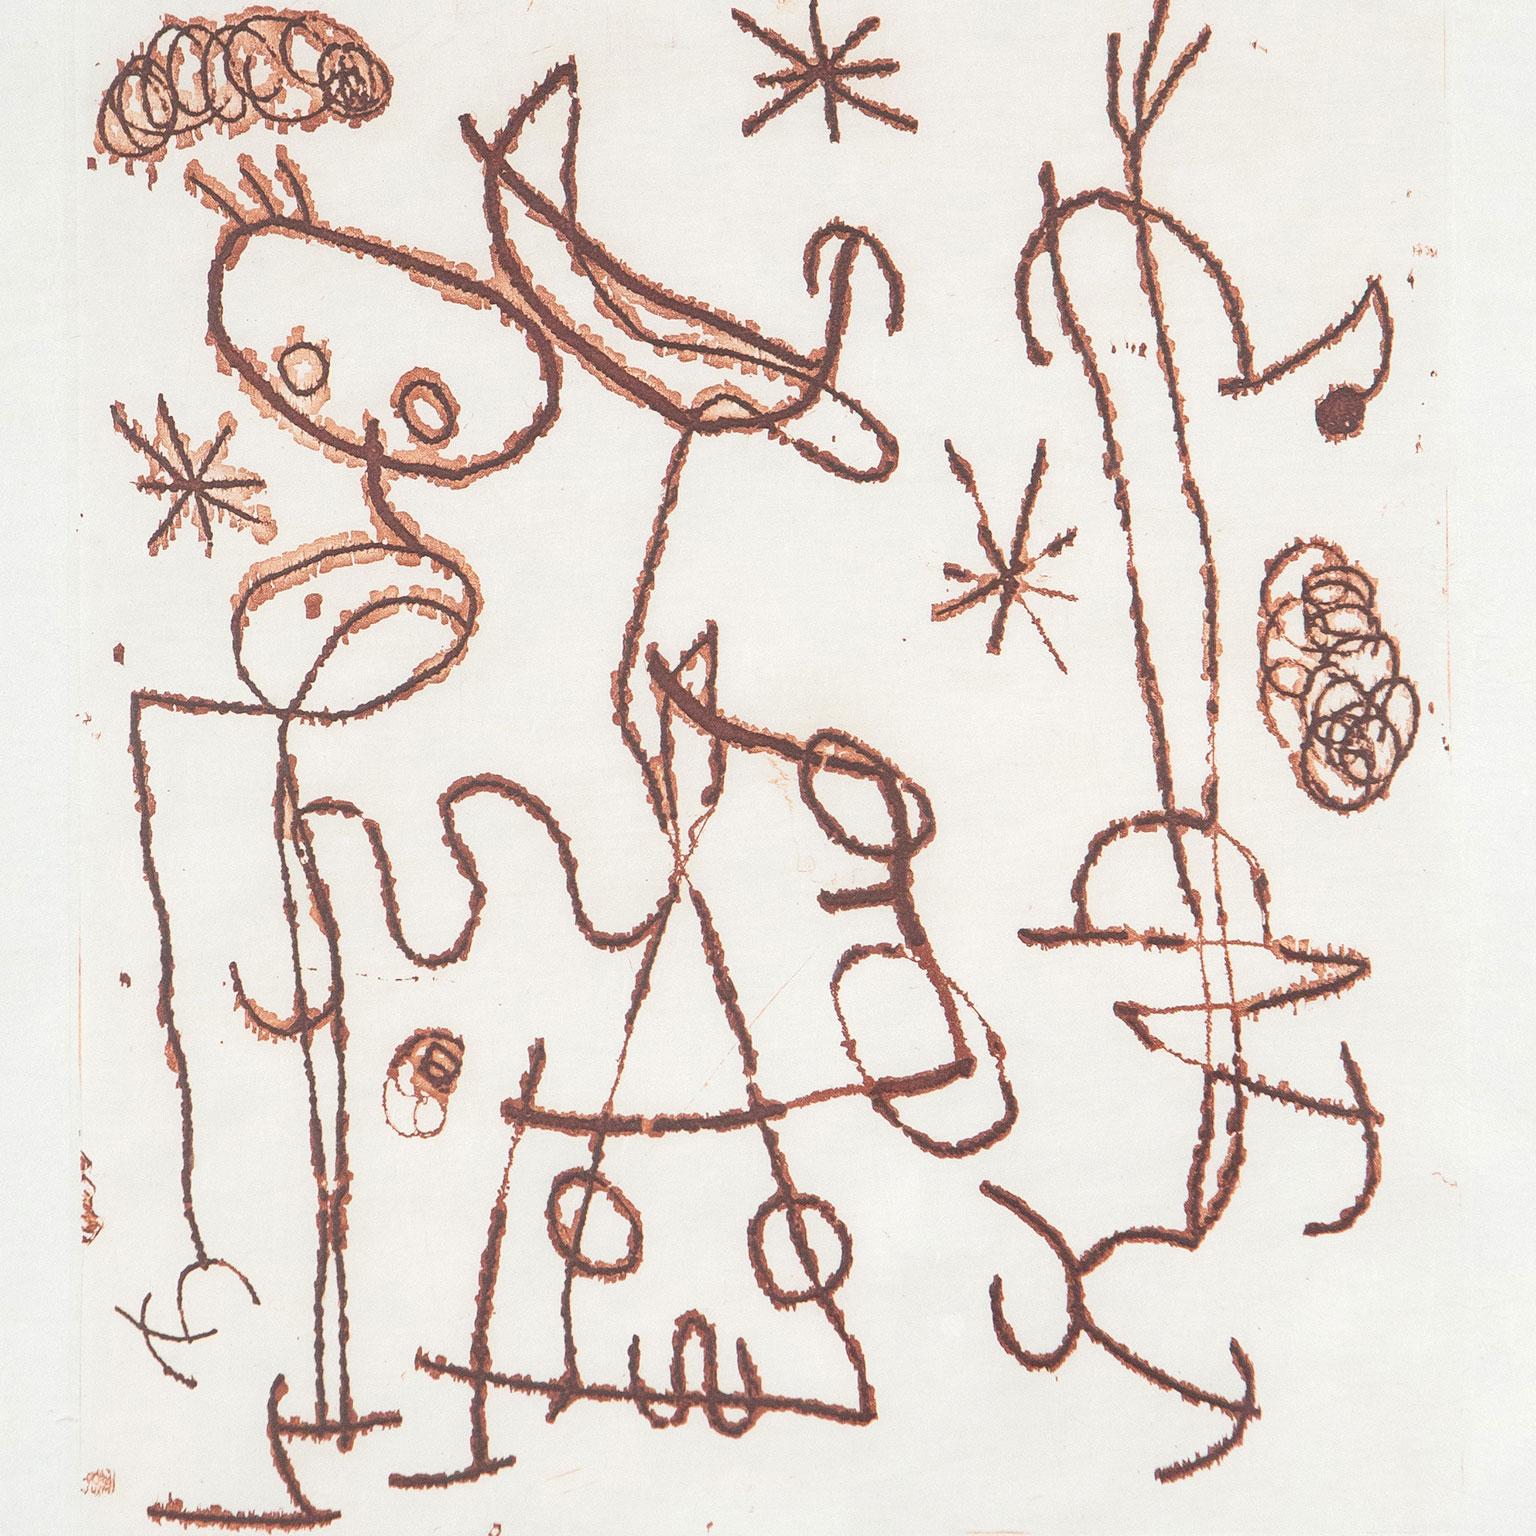 Paroles Peintes III - Abstract Expressionist Print by Joan Miró